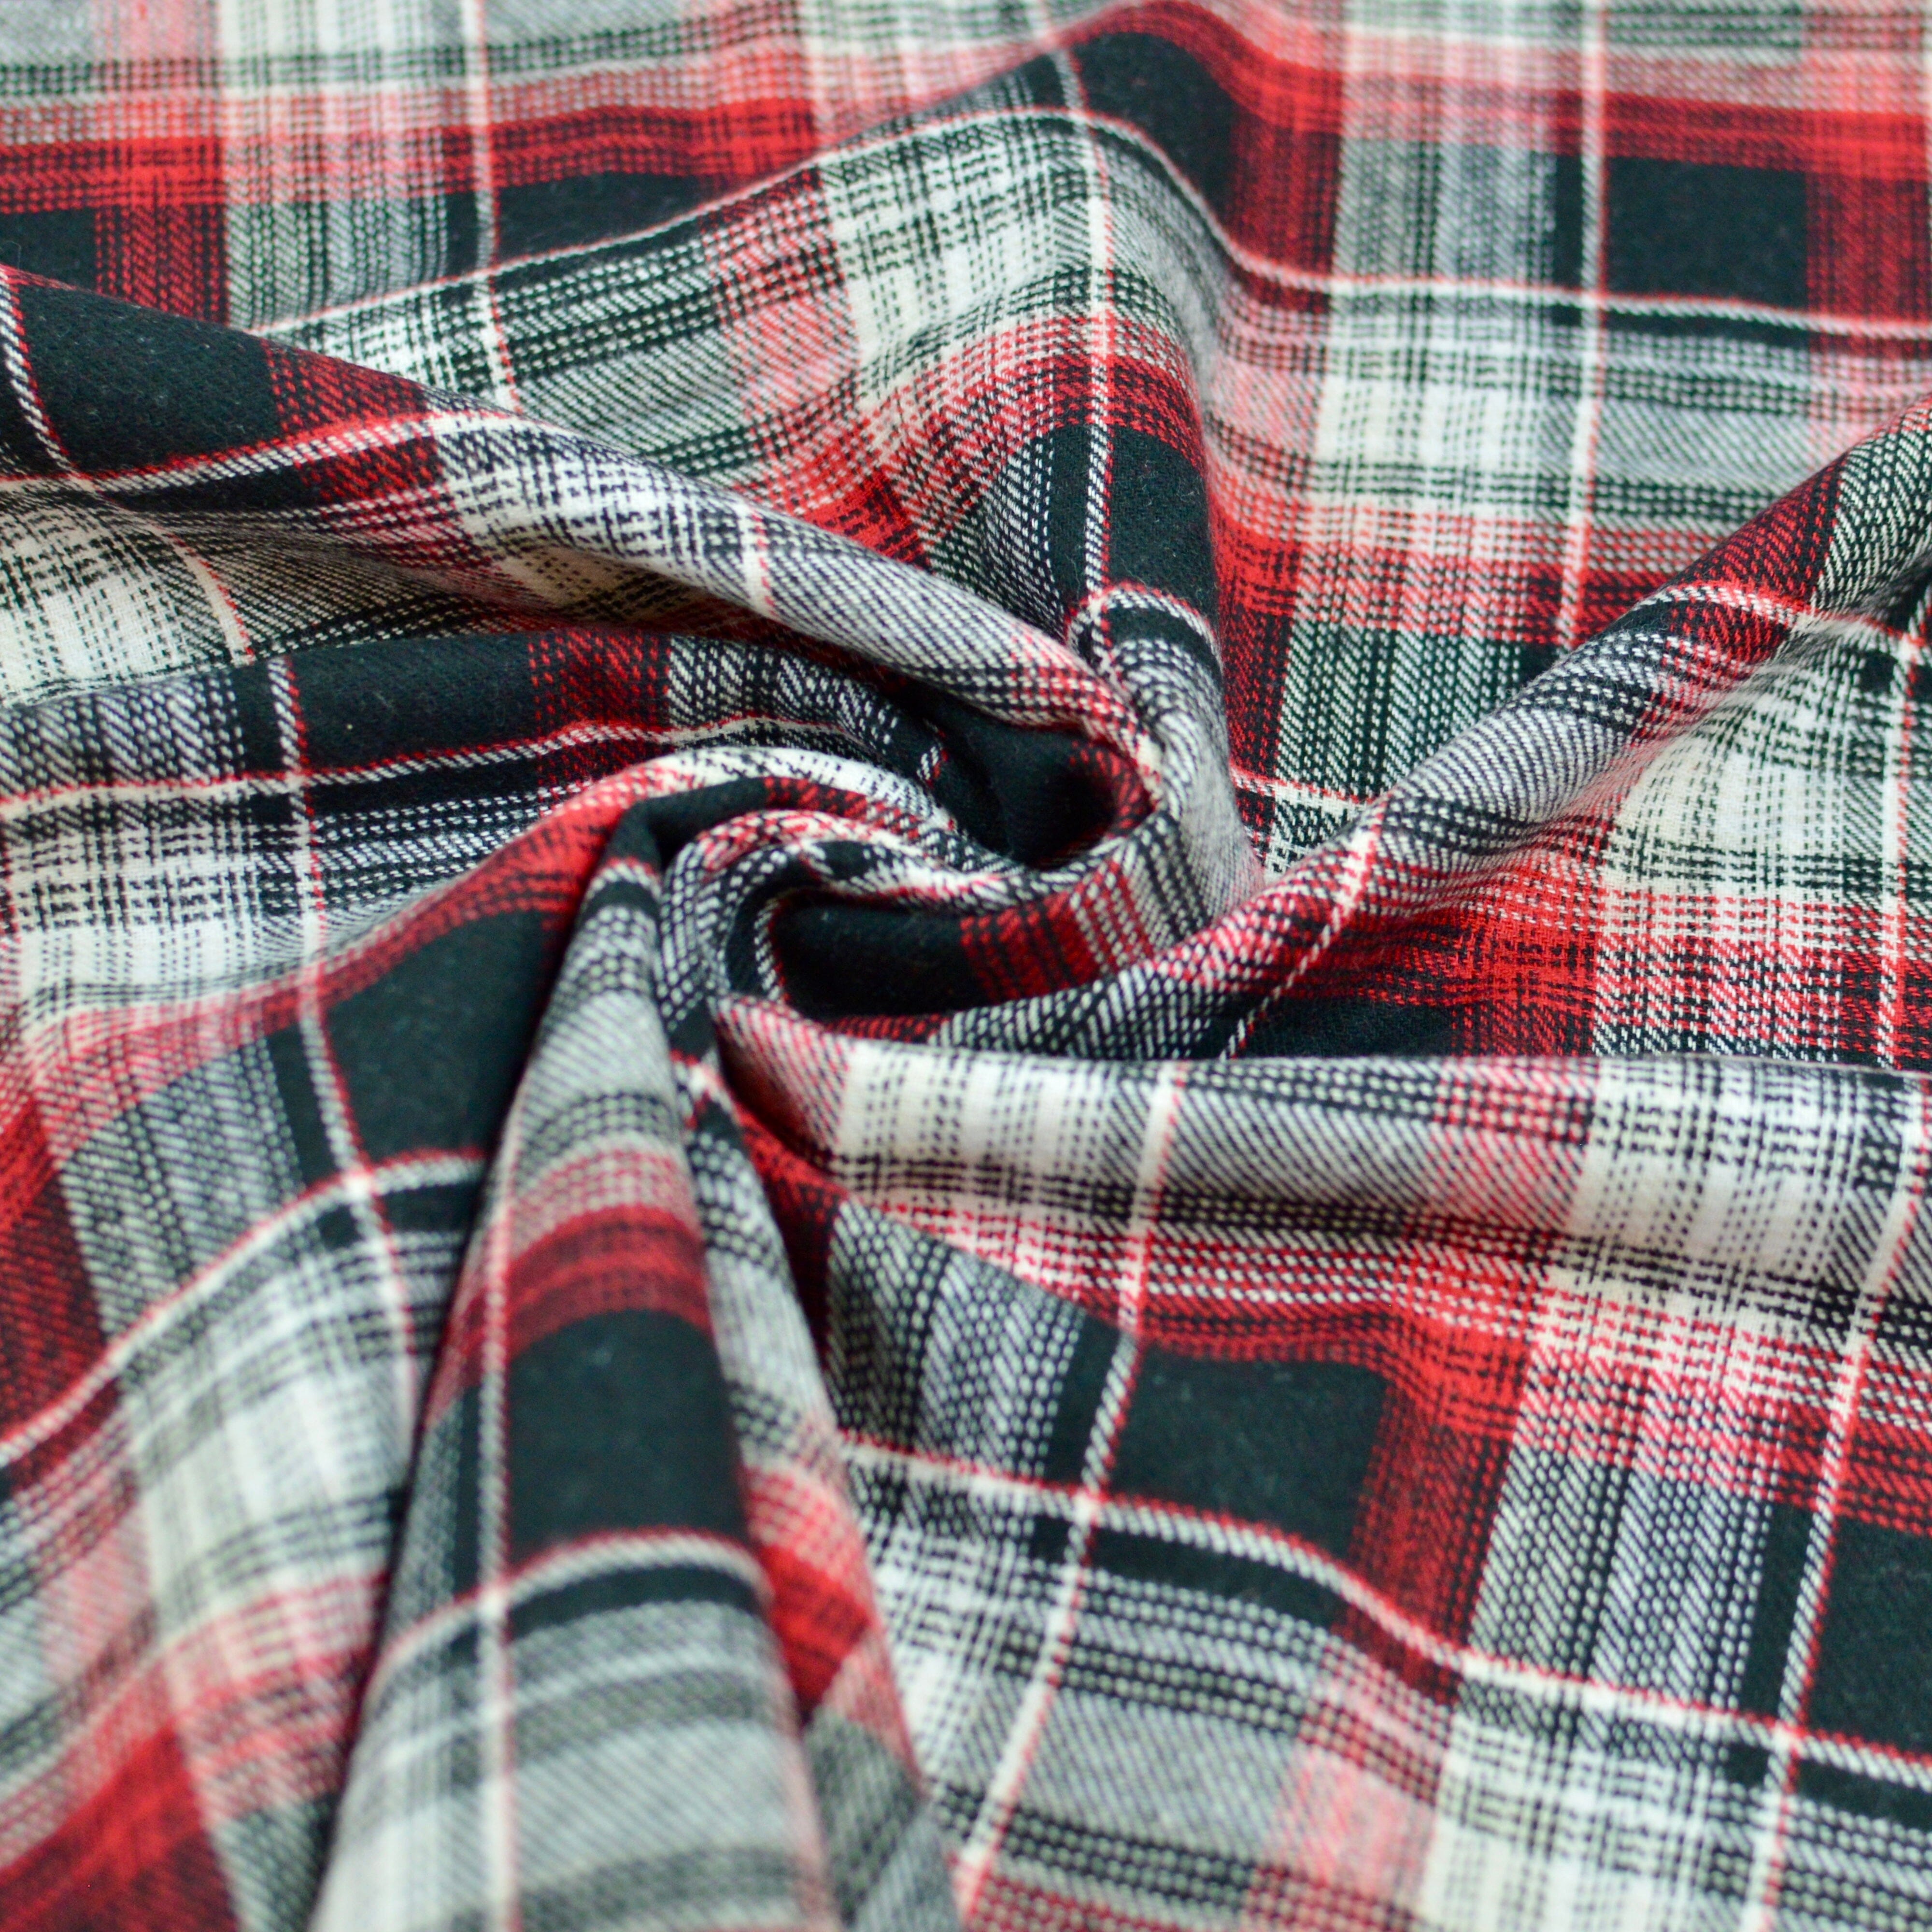 Baumwoll Flanell - rot schwarz kariert Fabric poshpinks